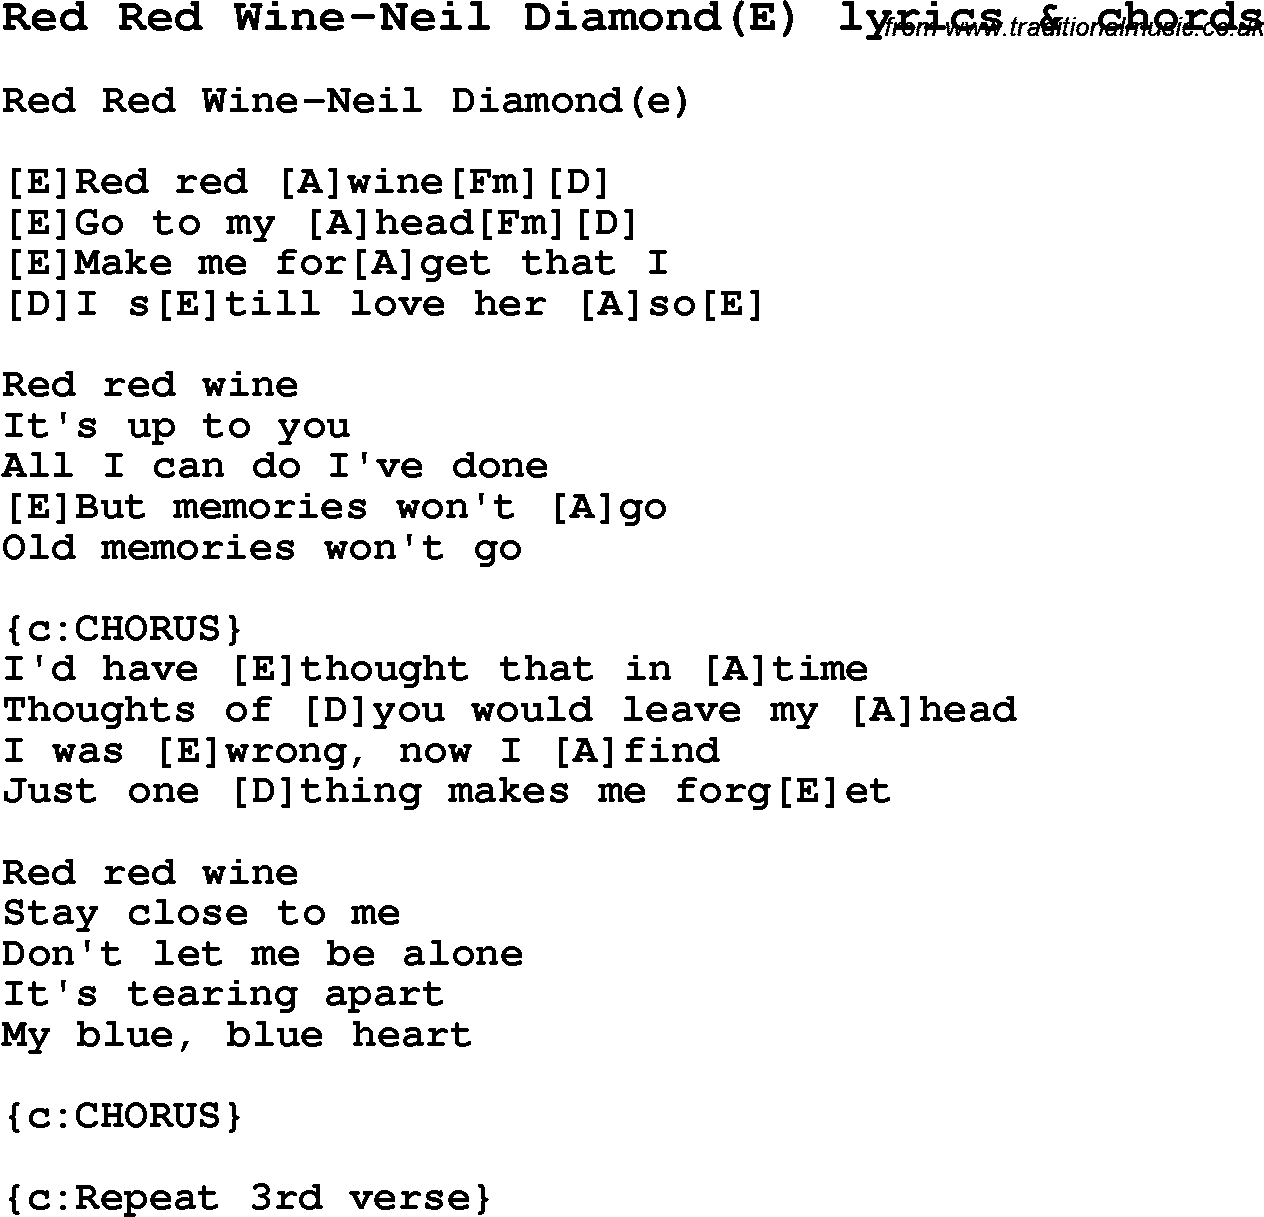 Love Song Lyrics for: Red Red Wine-Neil Diamond(E) with chords for Ukulele, Guitar Banjo etc.